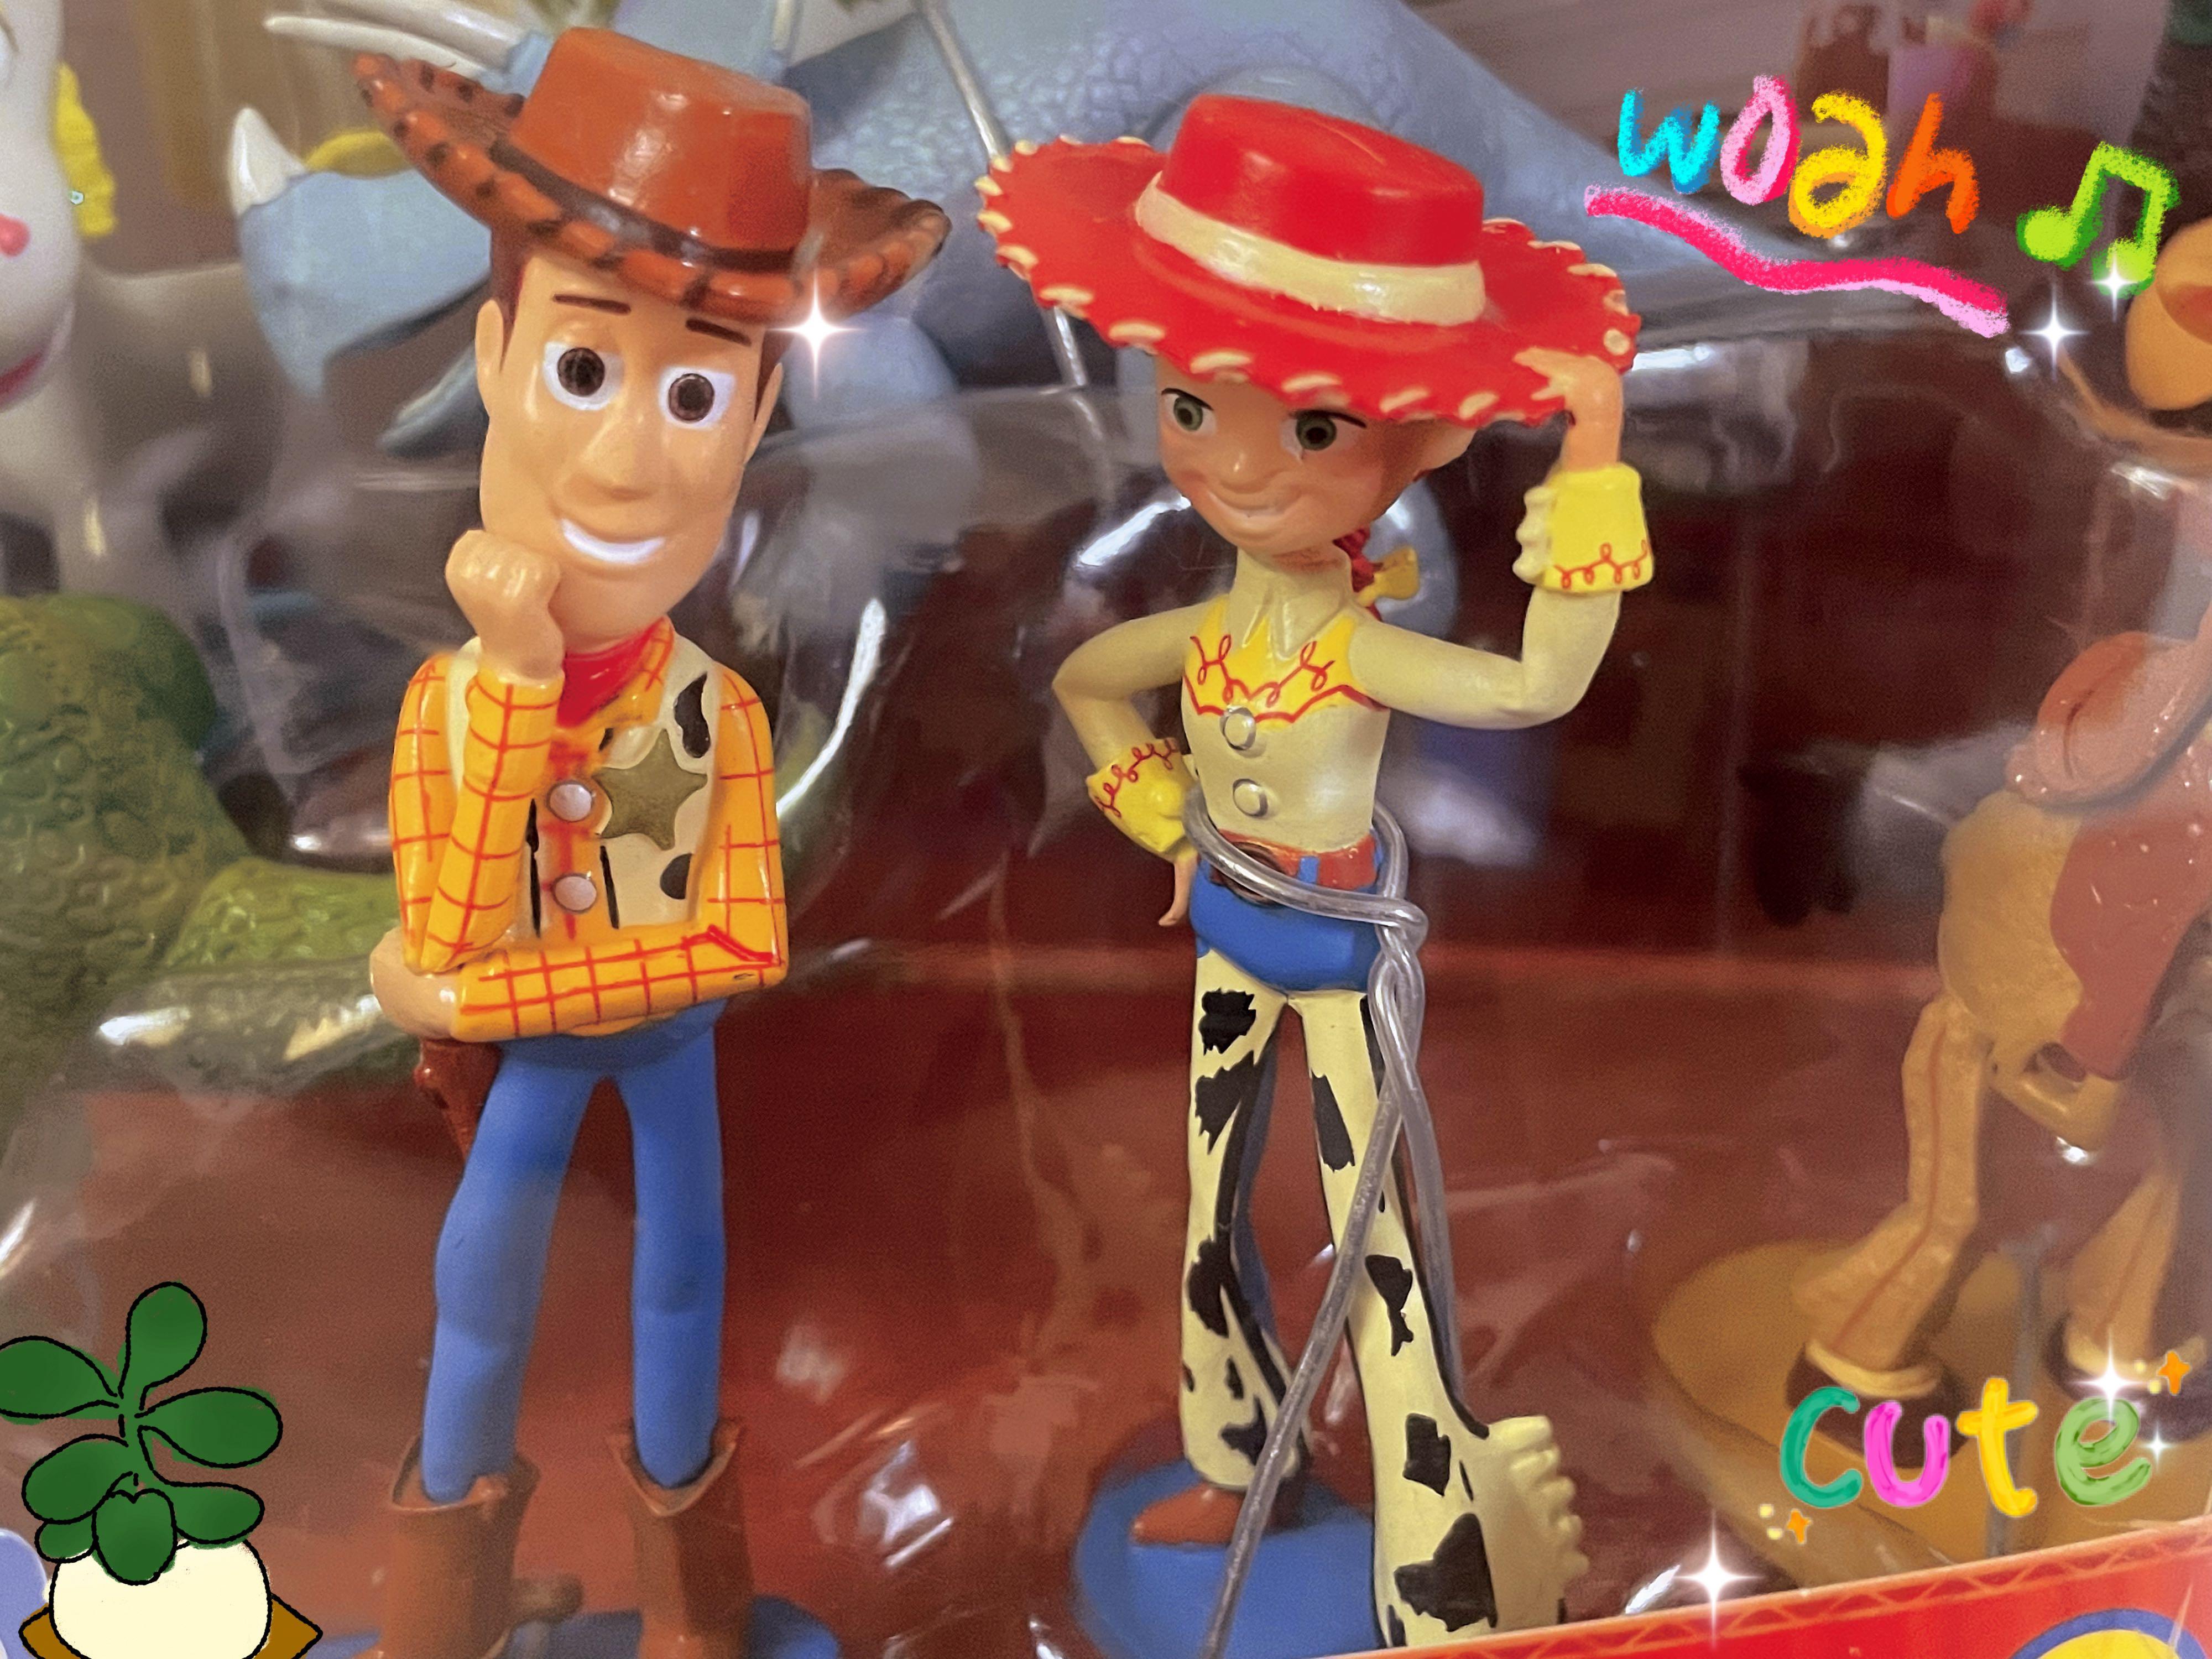 Disney Collection Disney PIXAR Toy Story Figurine Playset 